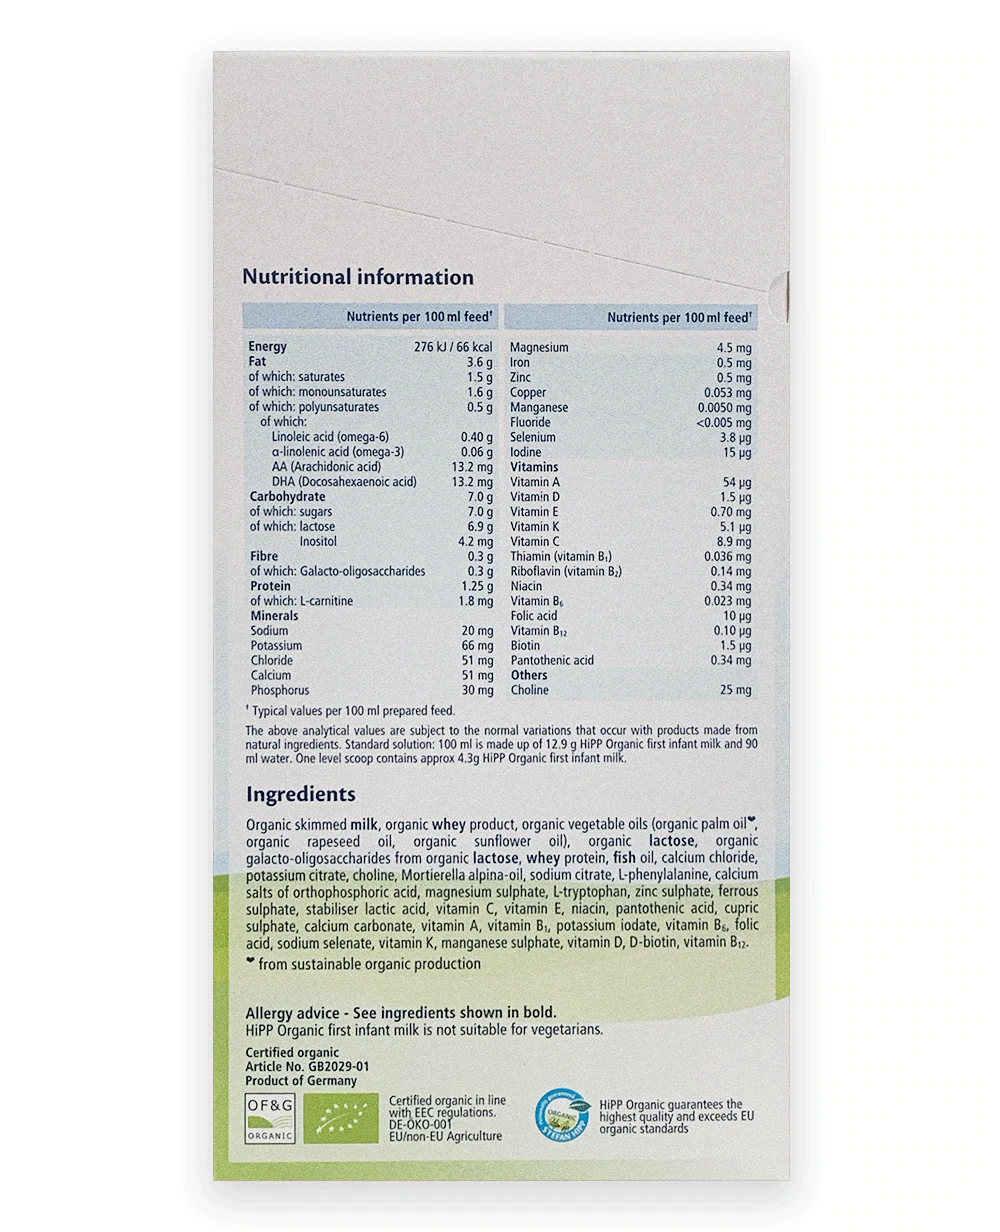 HiPP UK Stage 1 Organic Combiotic First Infant Milk Formula (800g)